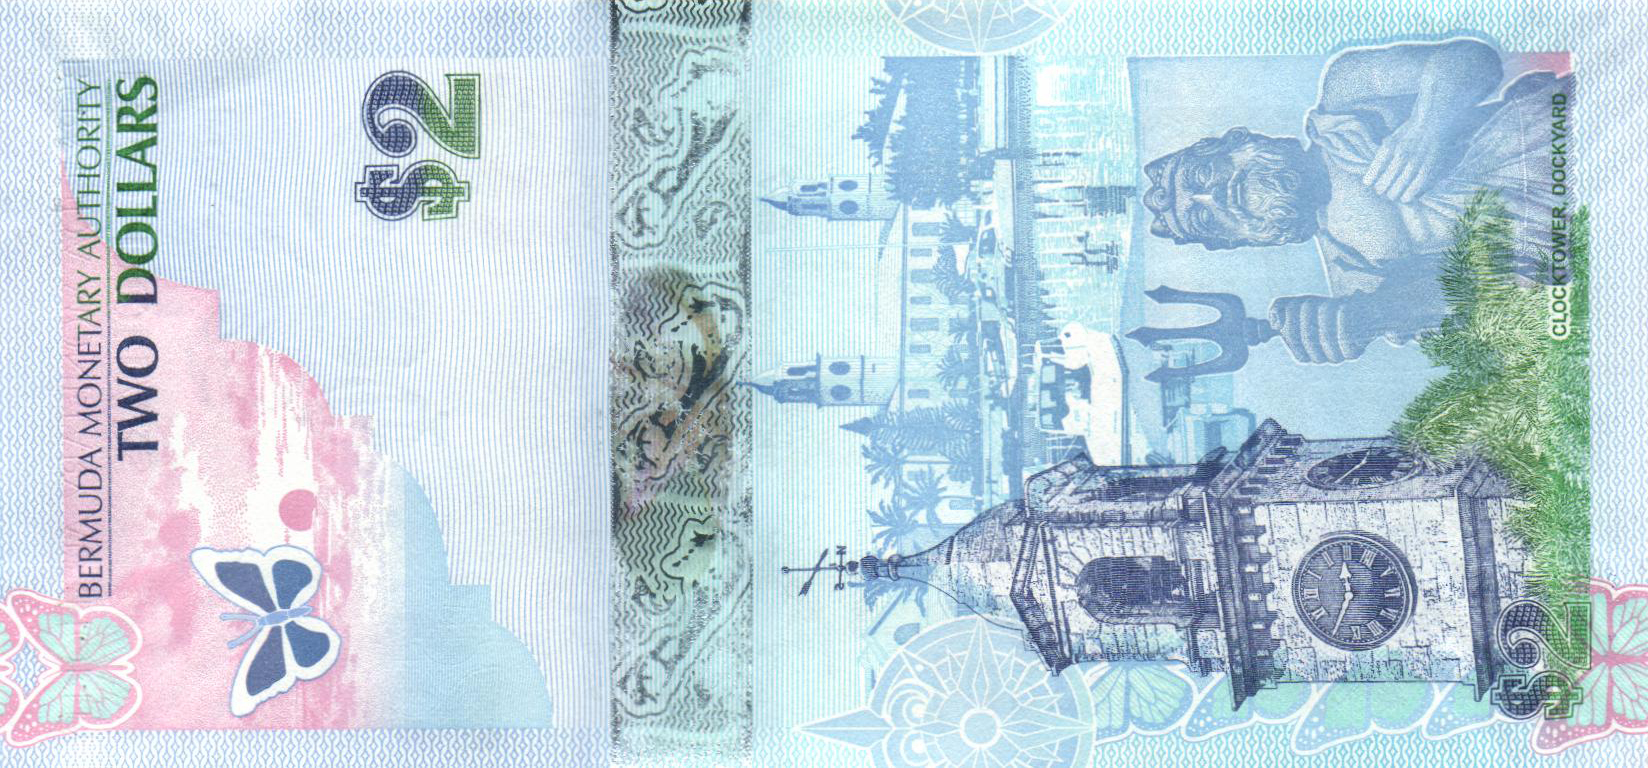 Bermuda new signature 2-dollar note (B230c) confirmed – BanknoteNews